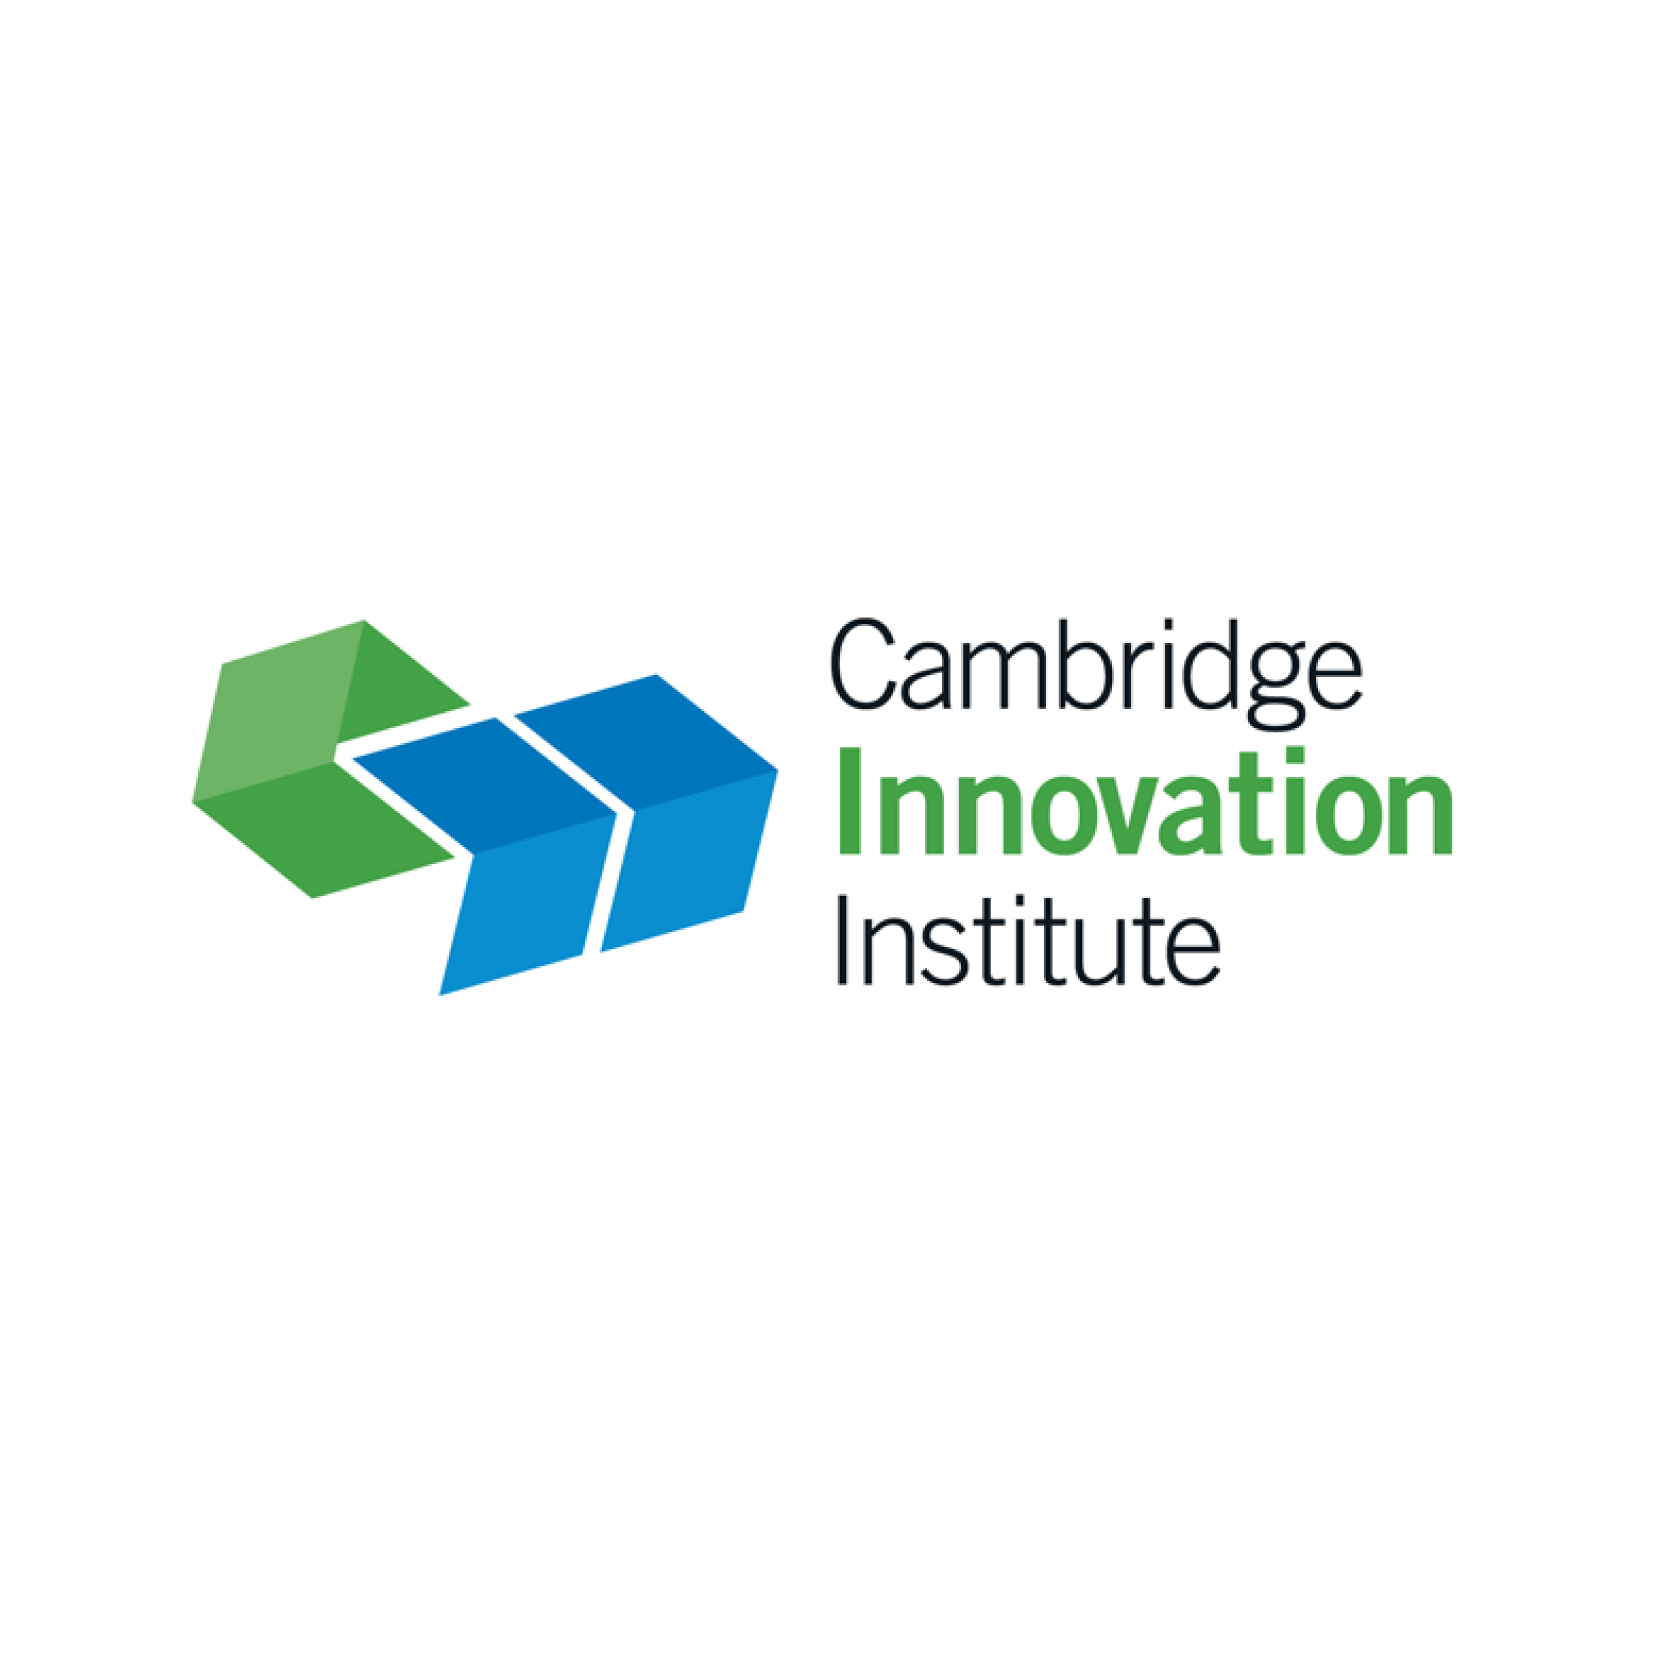 Cambridge innovation